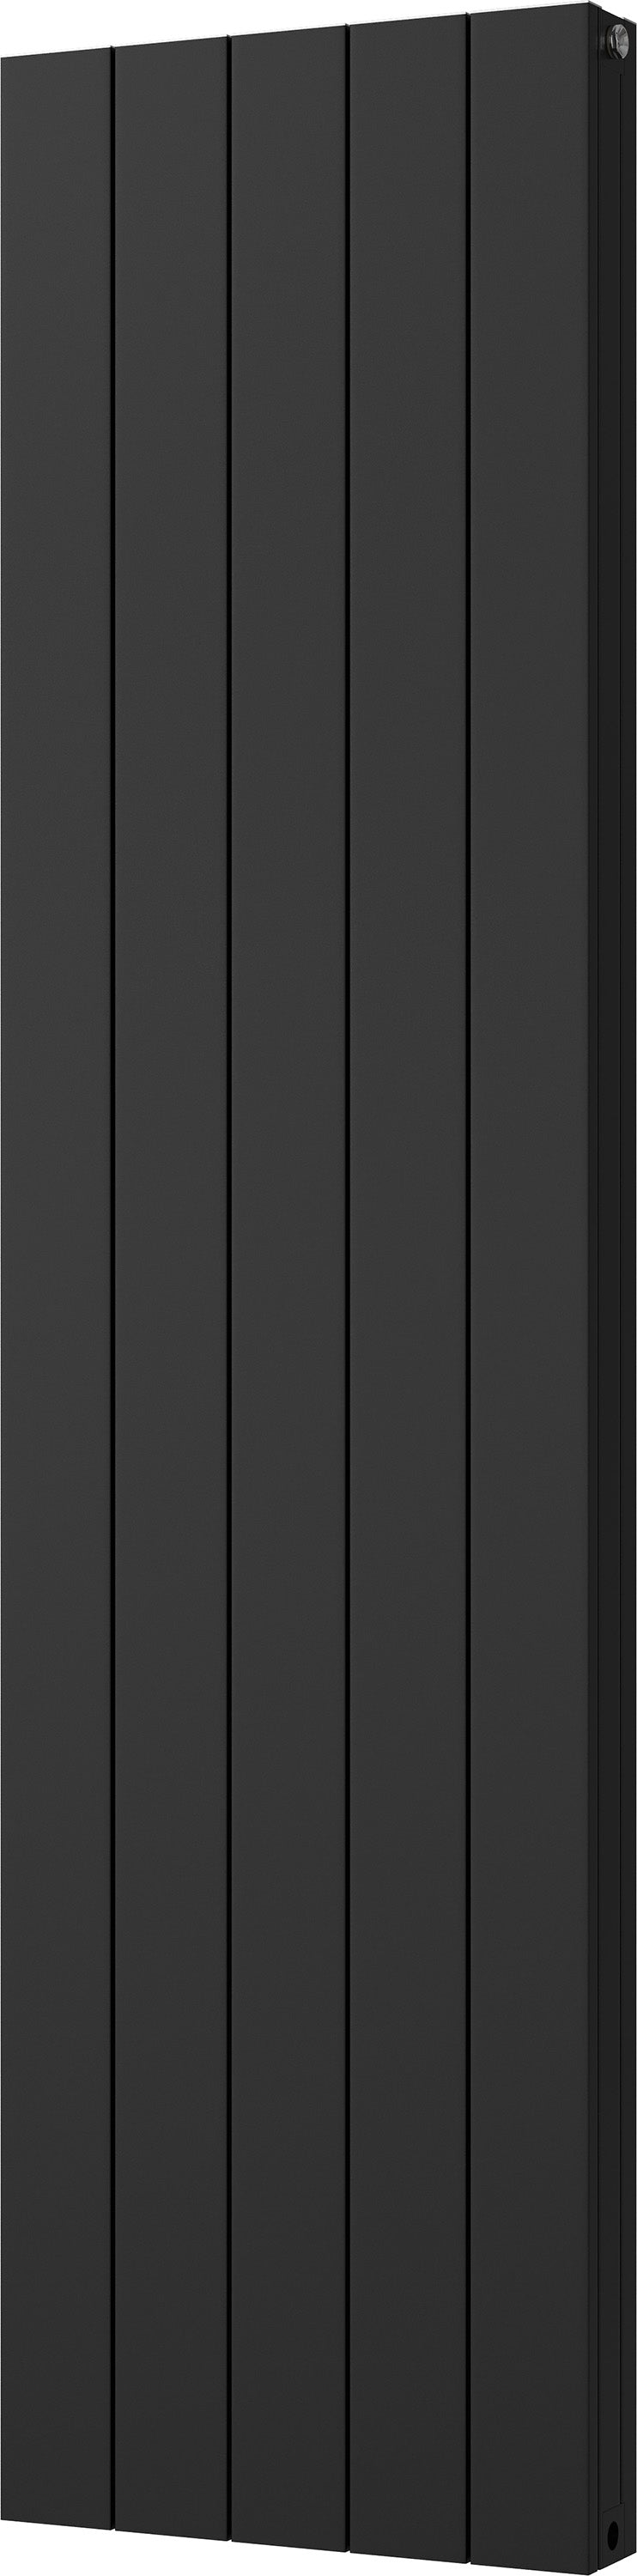 Thetford - Black Vertical Radiator H1800mm x W466mm Smooth